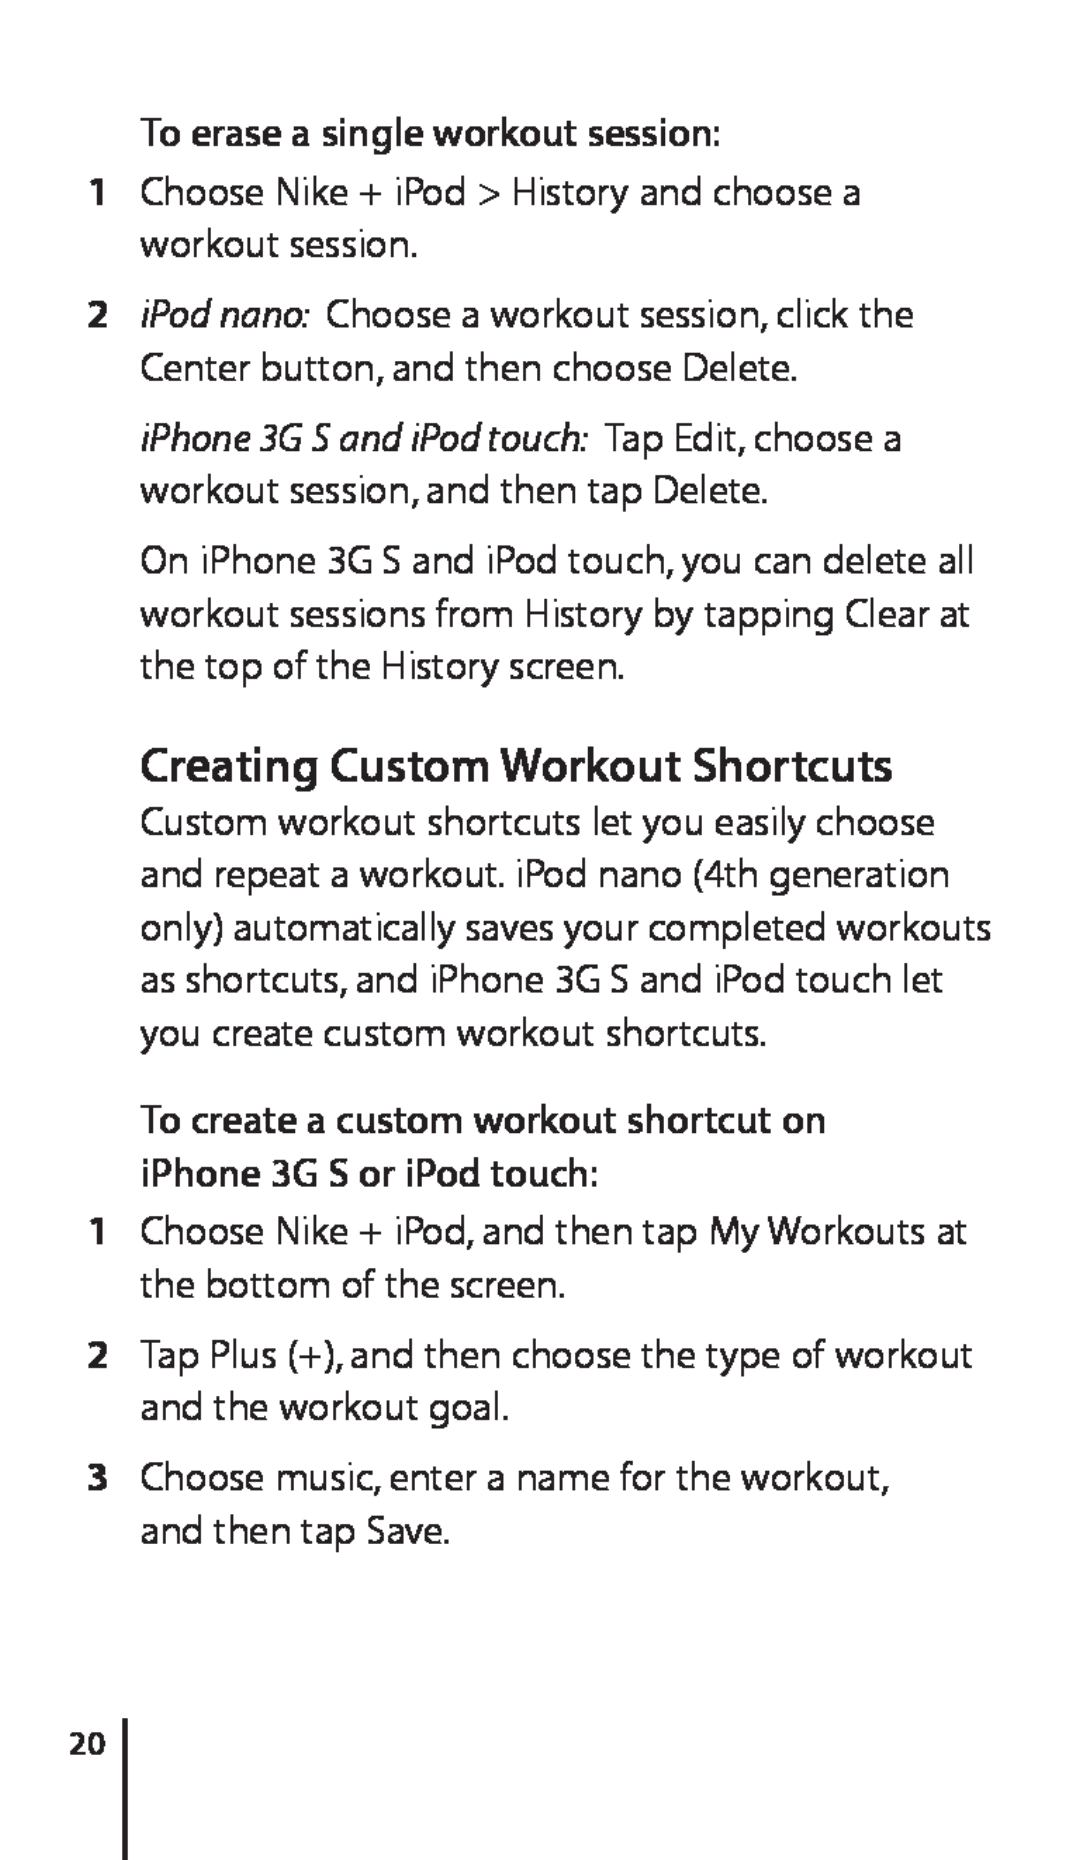 Apple Nike + iPod Sensor, 034-4945-A manual Creating Custom Workout Shortcuts, To erase a single workout session 